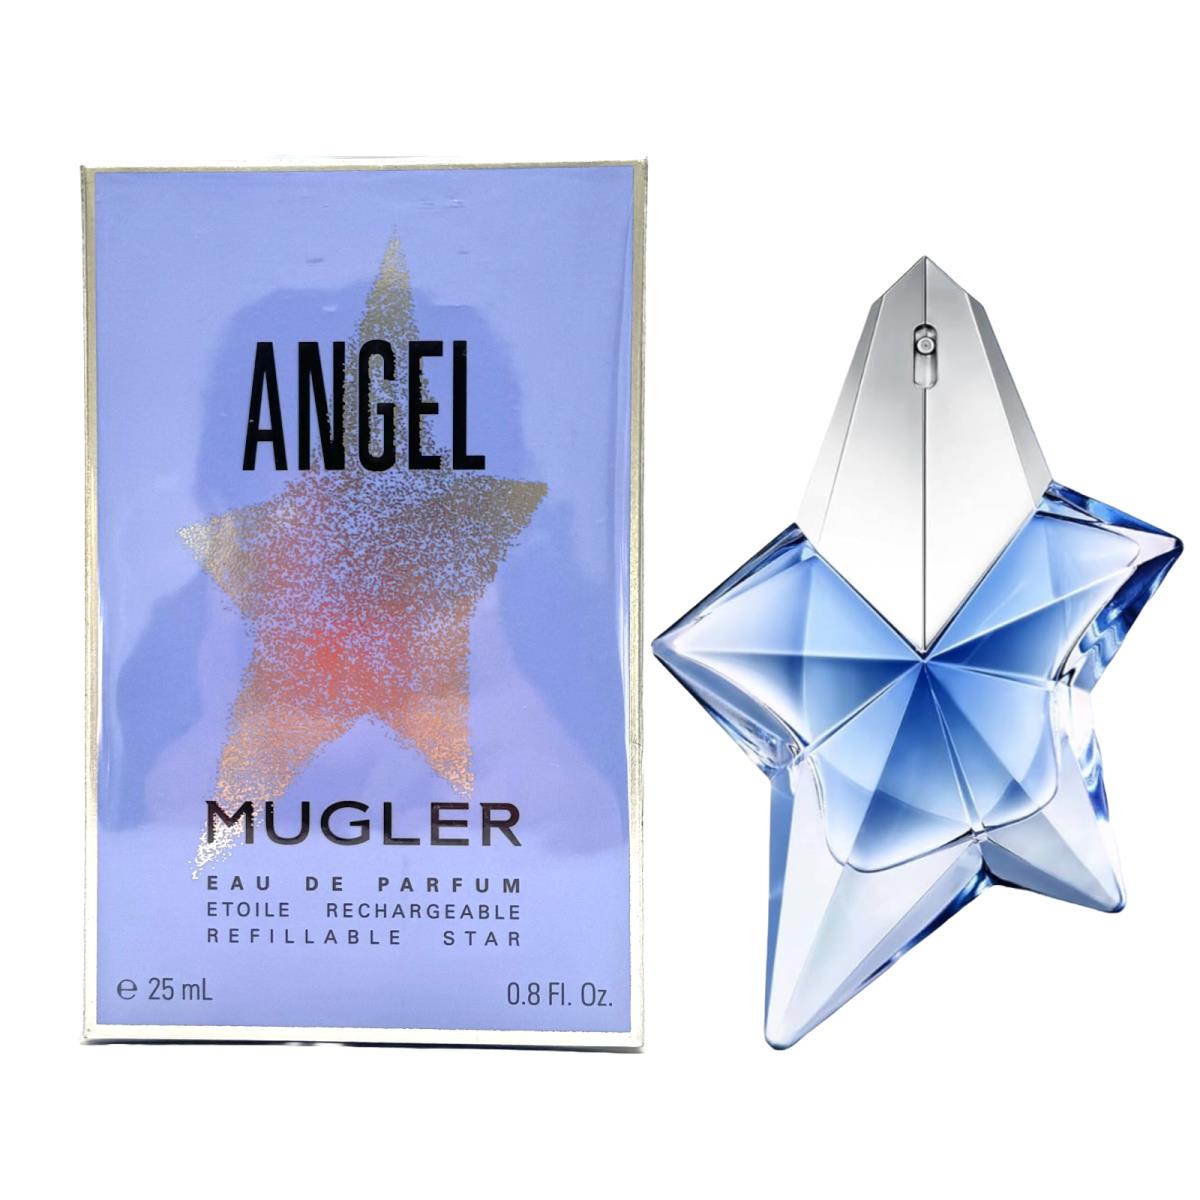 Angel by Thierry Mugler For Women 0.8 oz Eau de Parfum Refillable Spry